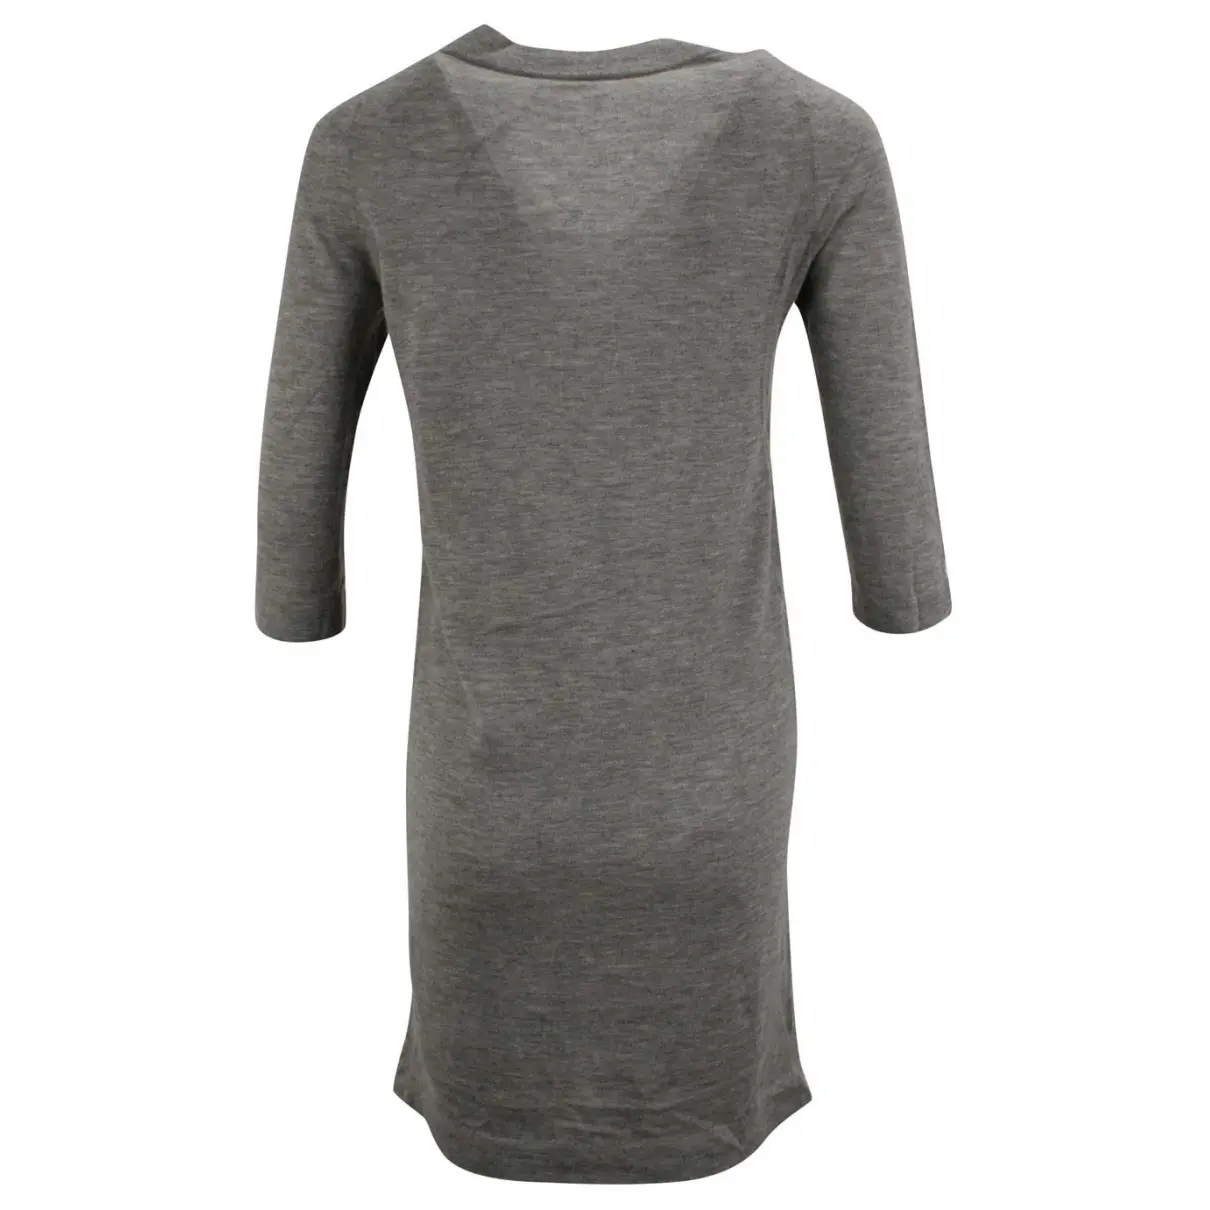 Buy 3.1 Phillip Lim Wool mid-length dress online